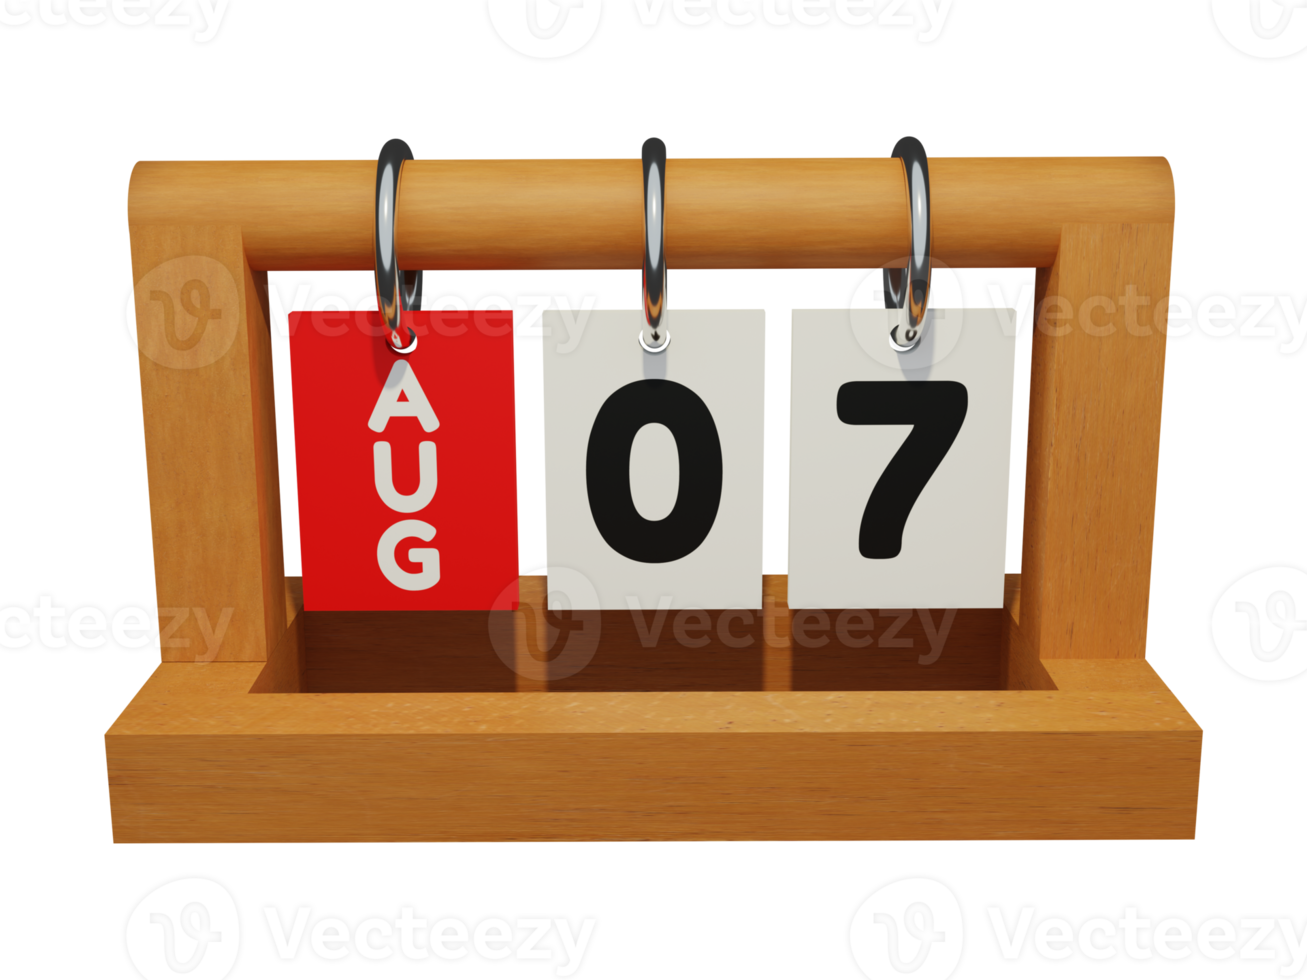 august 7 modern unique wooden calendar 3d rendering front view png